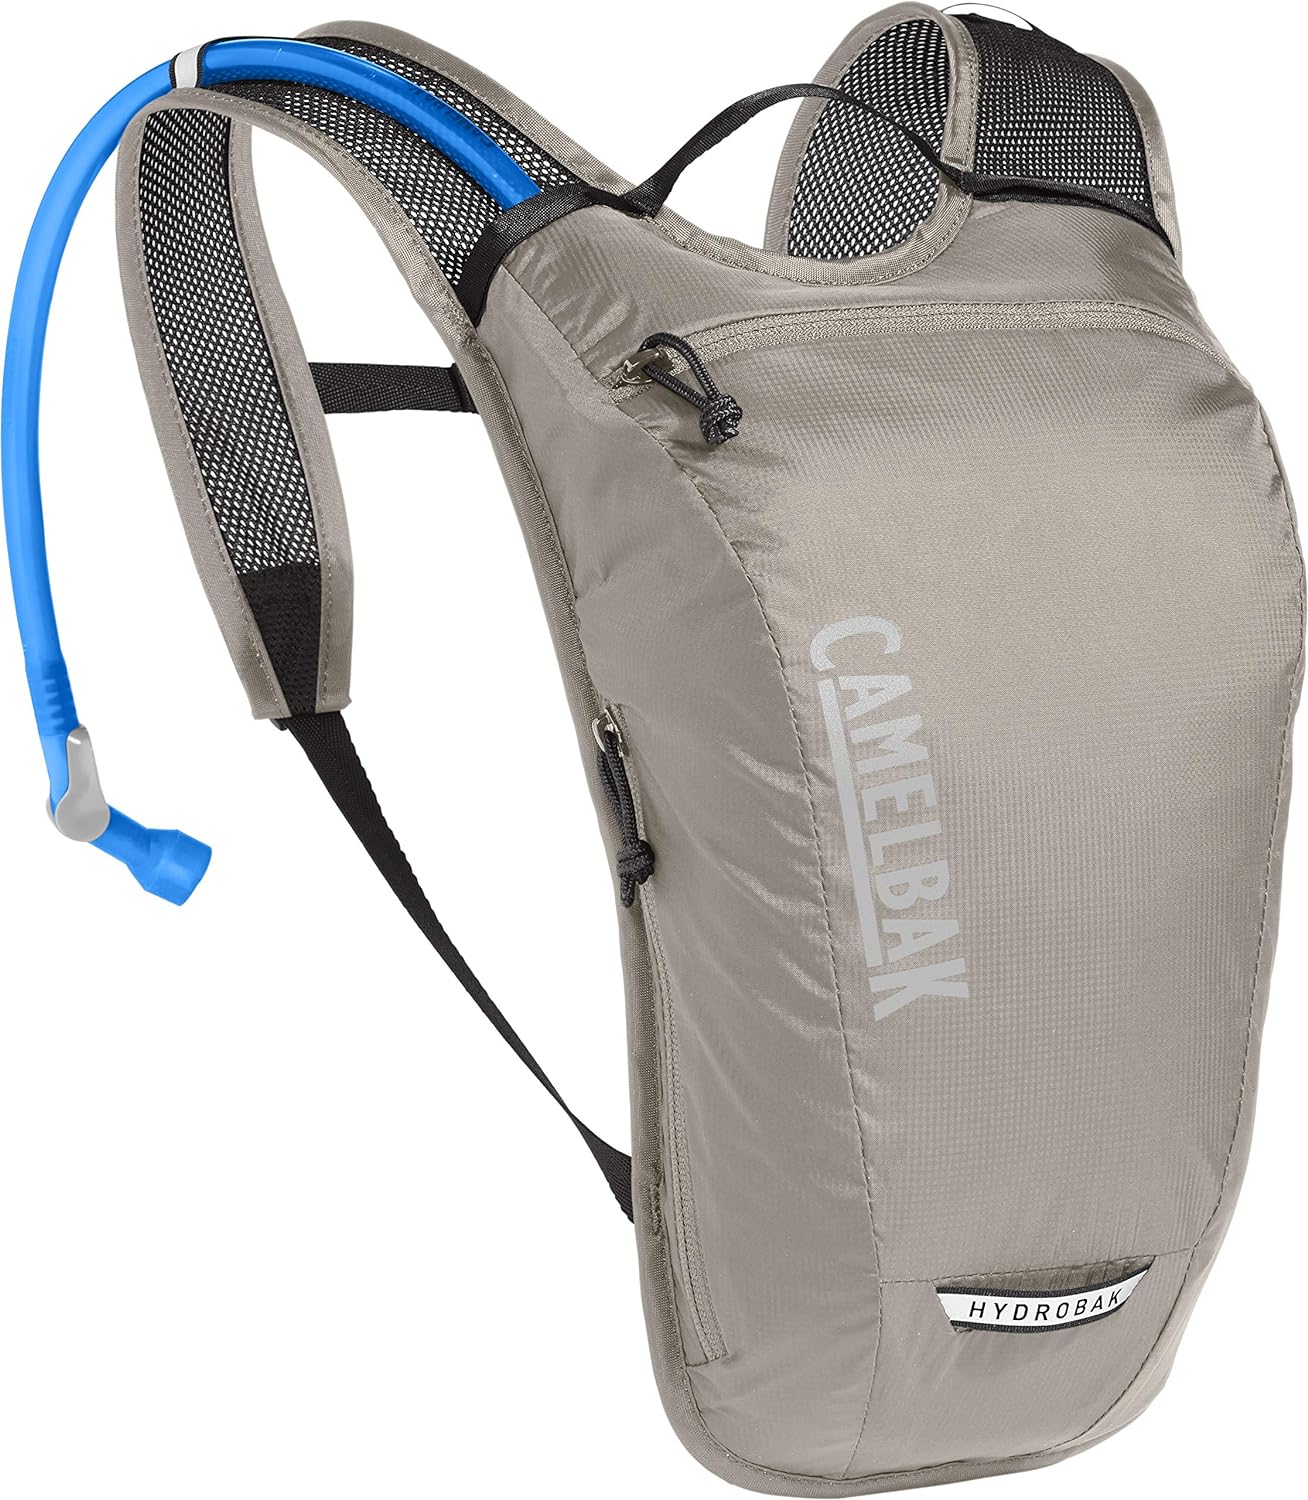 50-Oz CamelBak Hydrobak Light Bike Hydration Backpack (Aluminum/Black) $30.38 + Free Shipping w/ Prime or on $35+